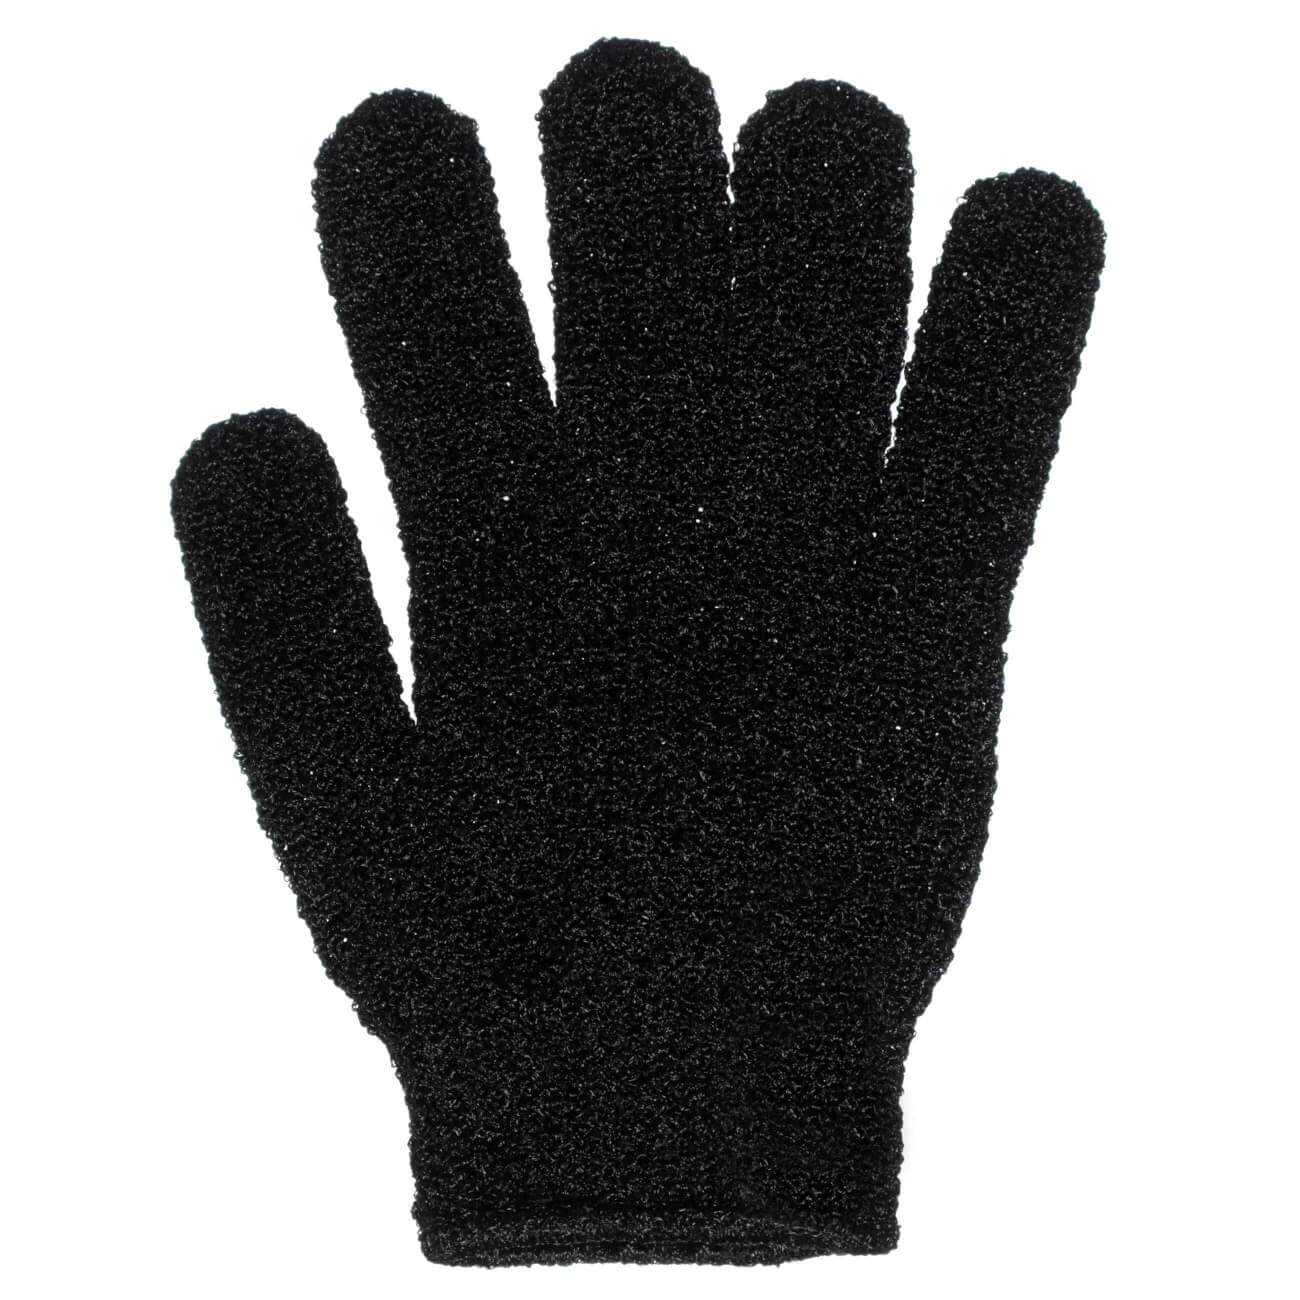 Перчатка для мытья тела, 20 см, 2 шт, отшелушивающая, нейлон, черная, Glamor мочалка для мытья тела 13 см полиэтилен черная бант glamor